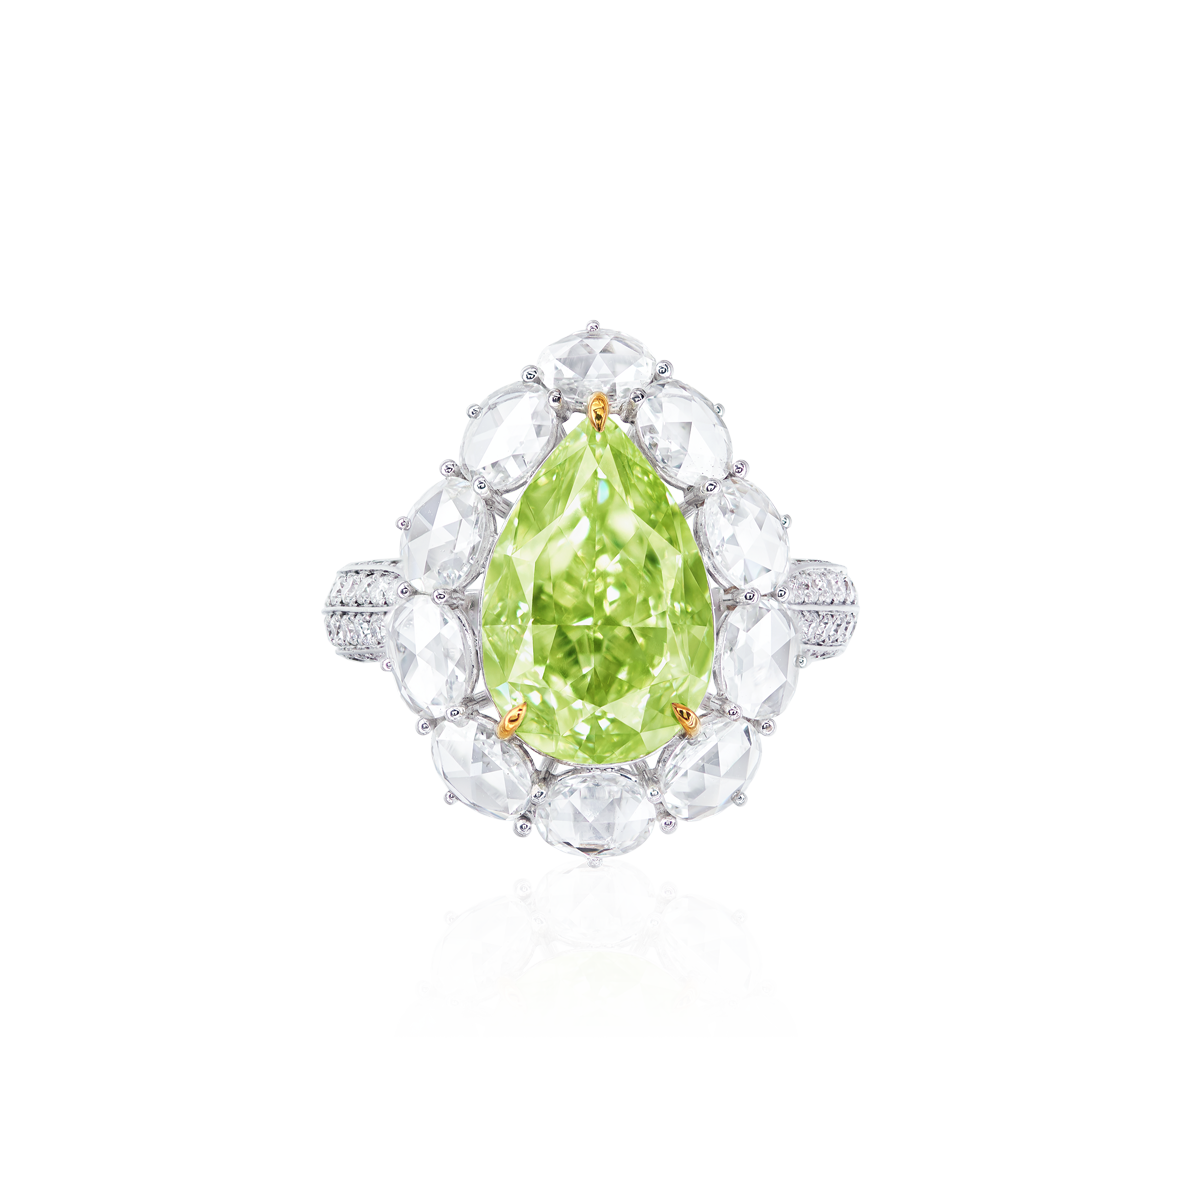 GIA 5.53 克拉黃綠鑽鑽戒
Fancy Yellow-Green Colored 
Diamond and Diamond Ring